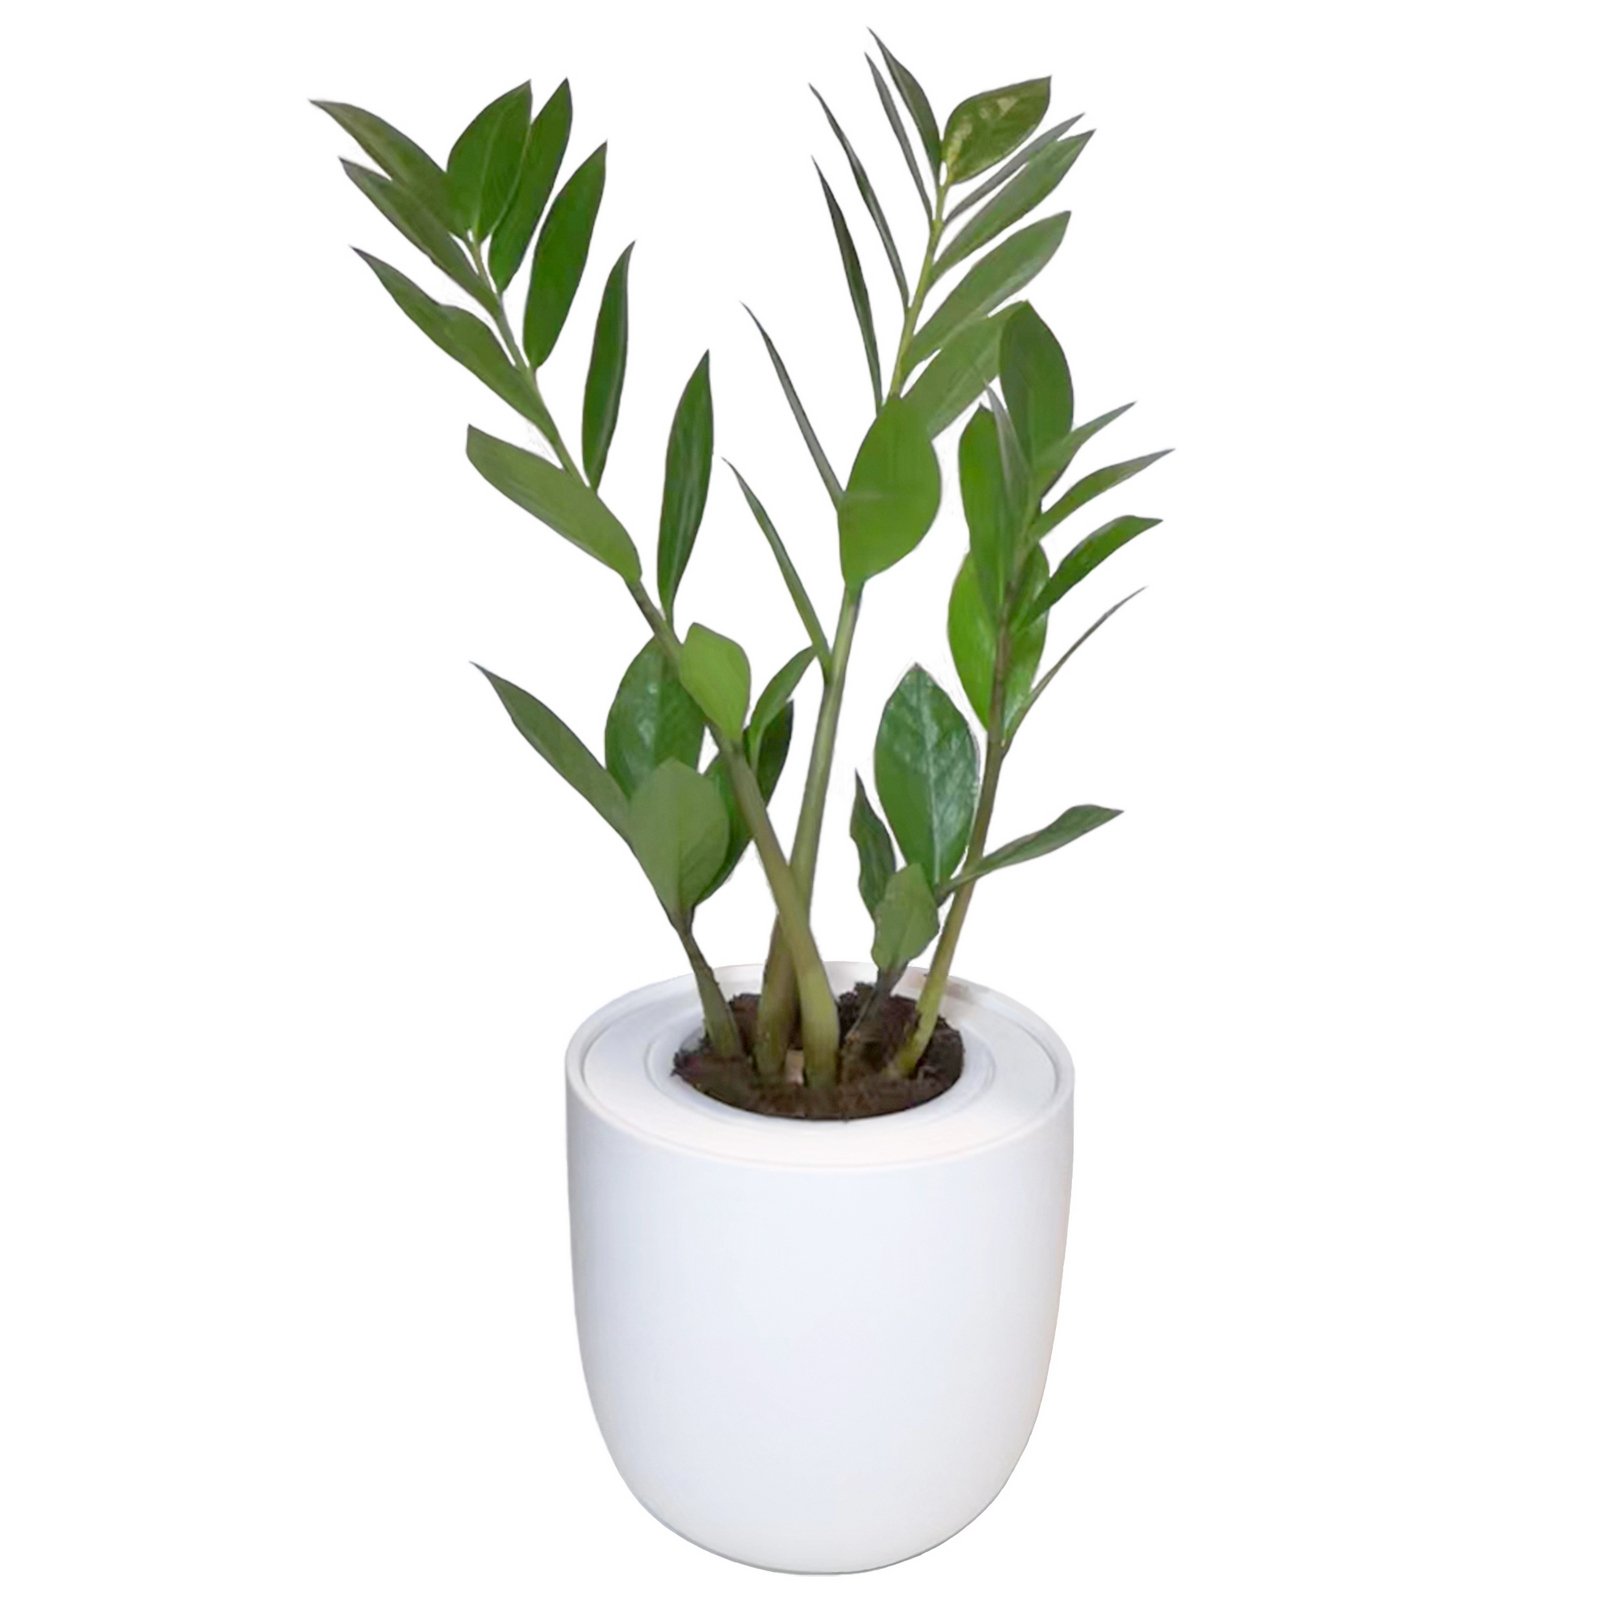 Hydroponic ZZ Plant Live Plants Growing Kit with White Ceramic Pot (ZZ Plant)